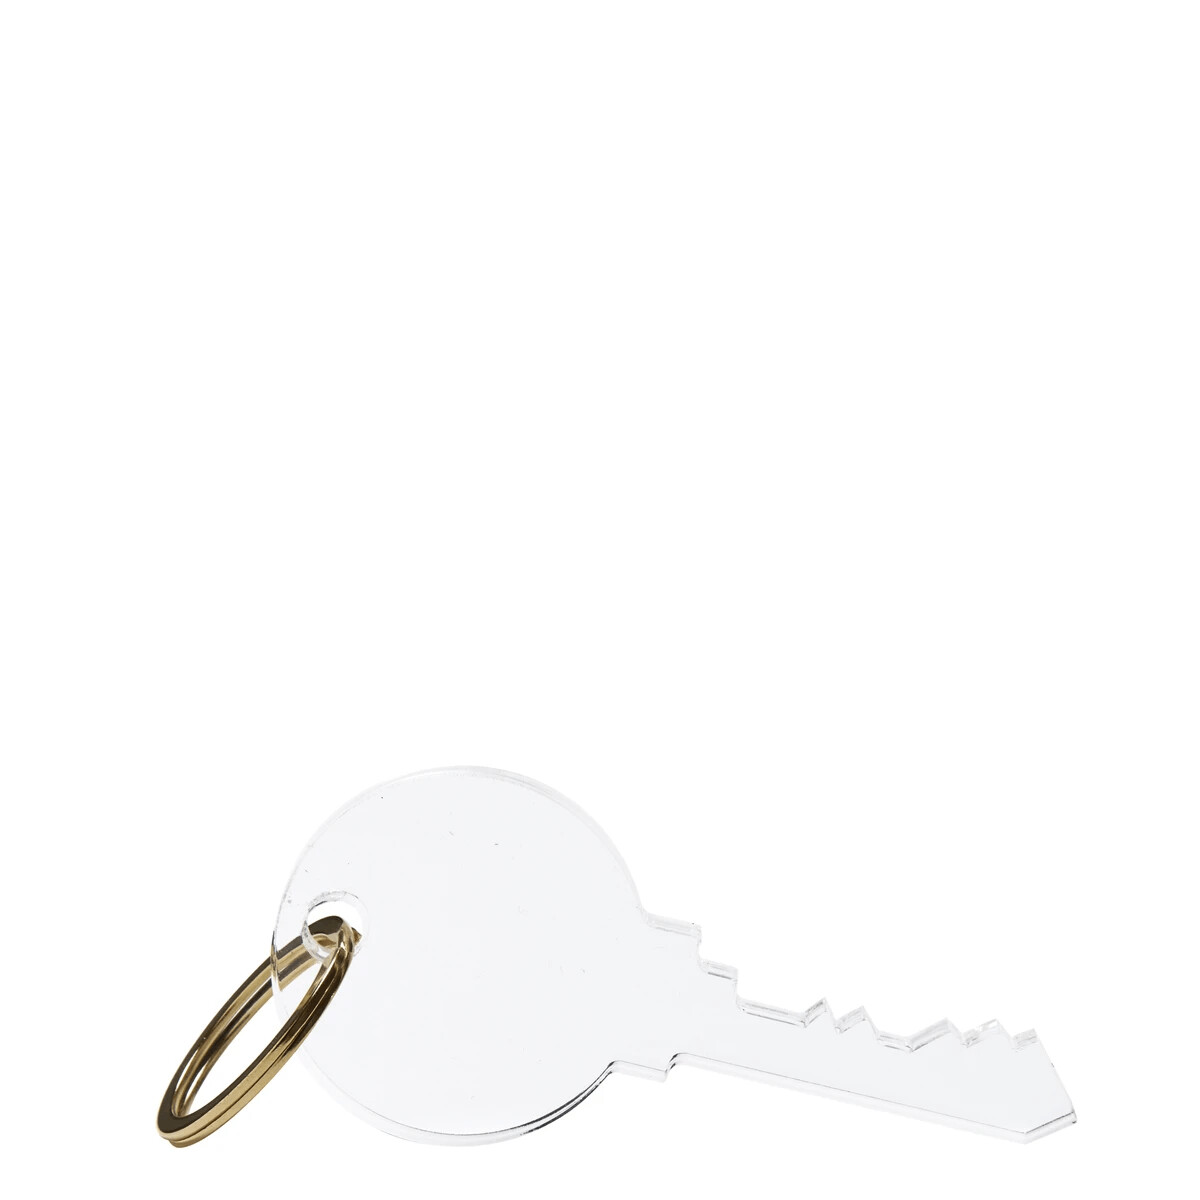 Keychain - key icon